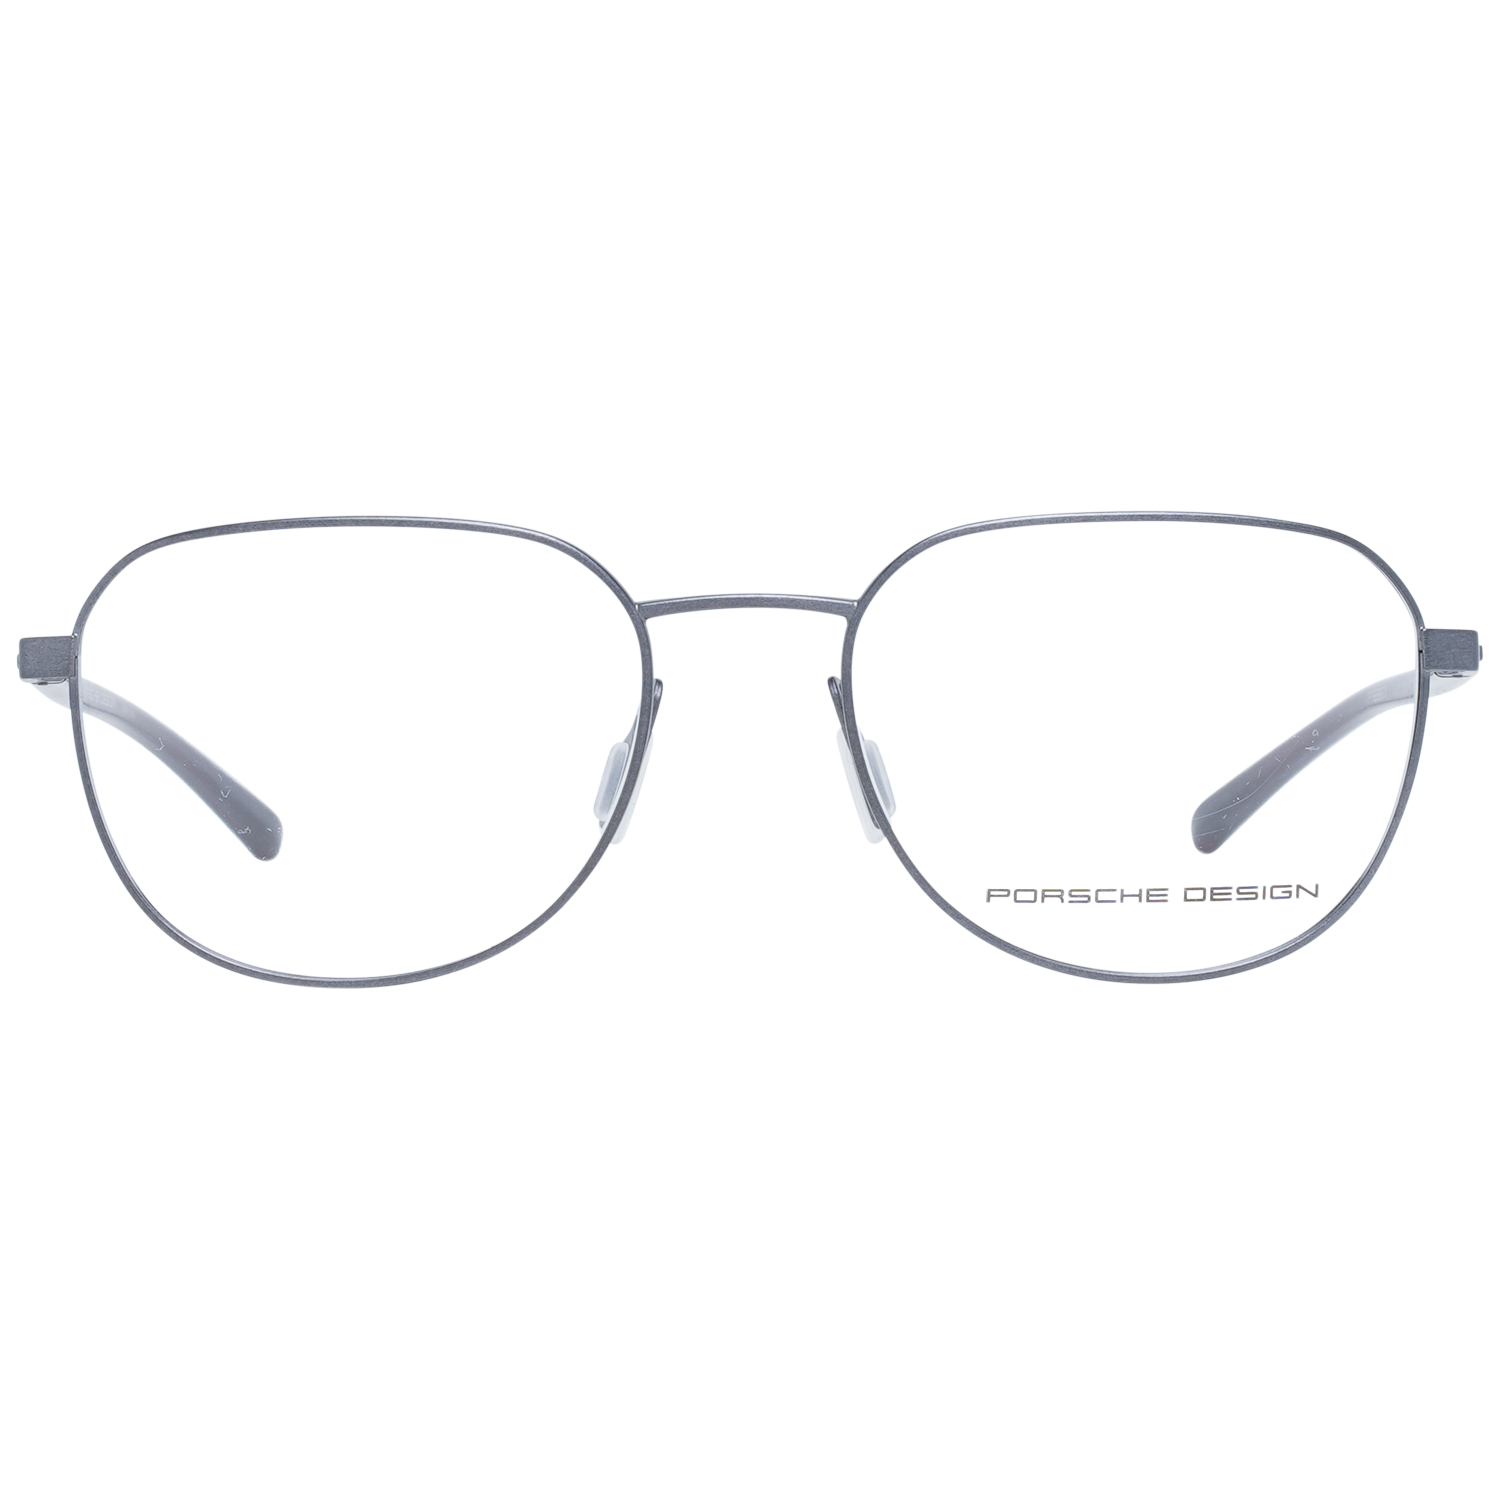 Porsche Design Eyeglasses Porsche Design Glasses Frame P8367 C 52 Eyeglasses Eyewear UK USA Australia 